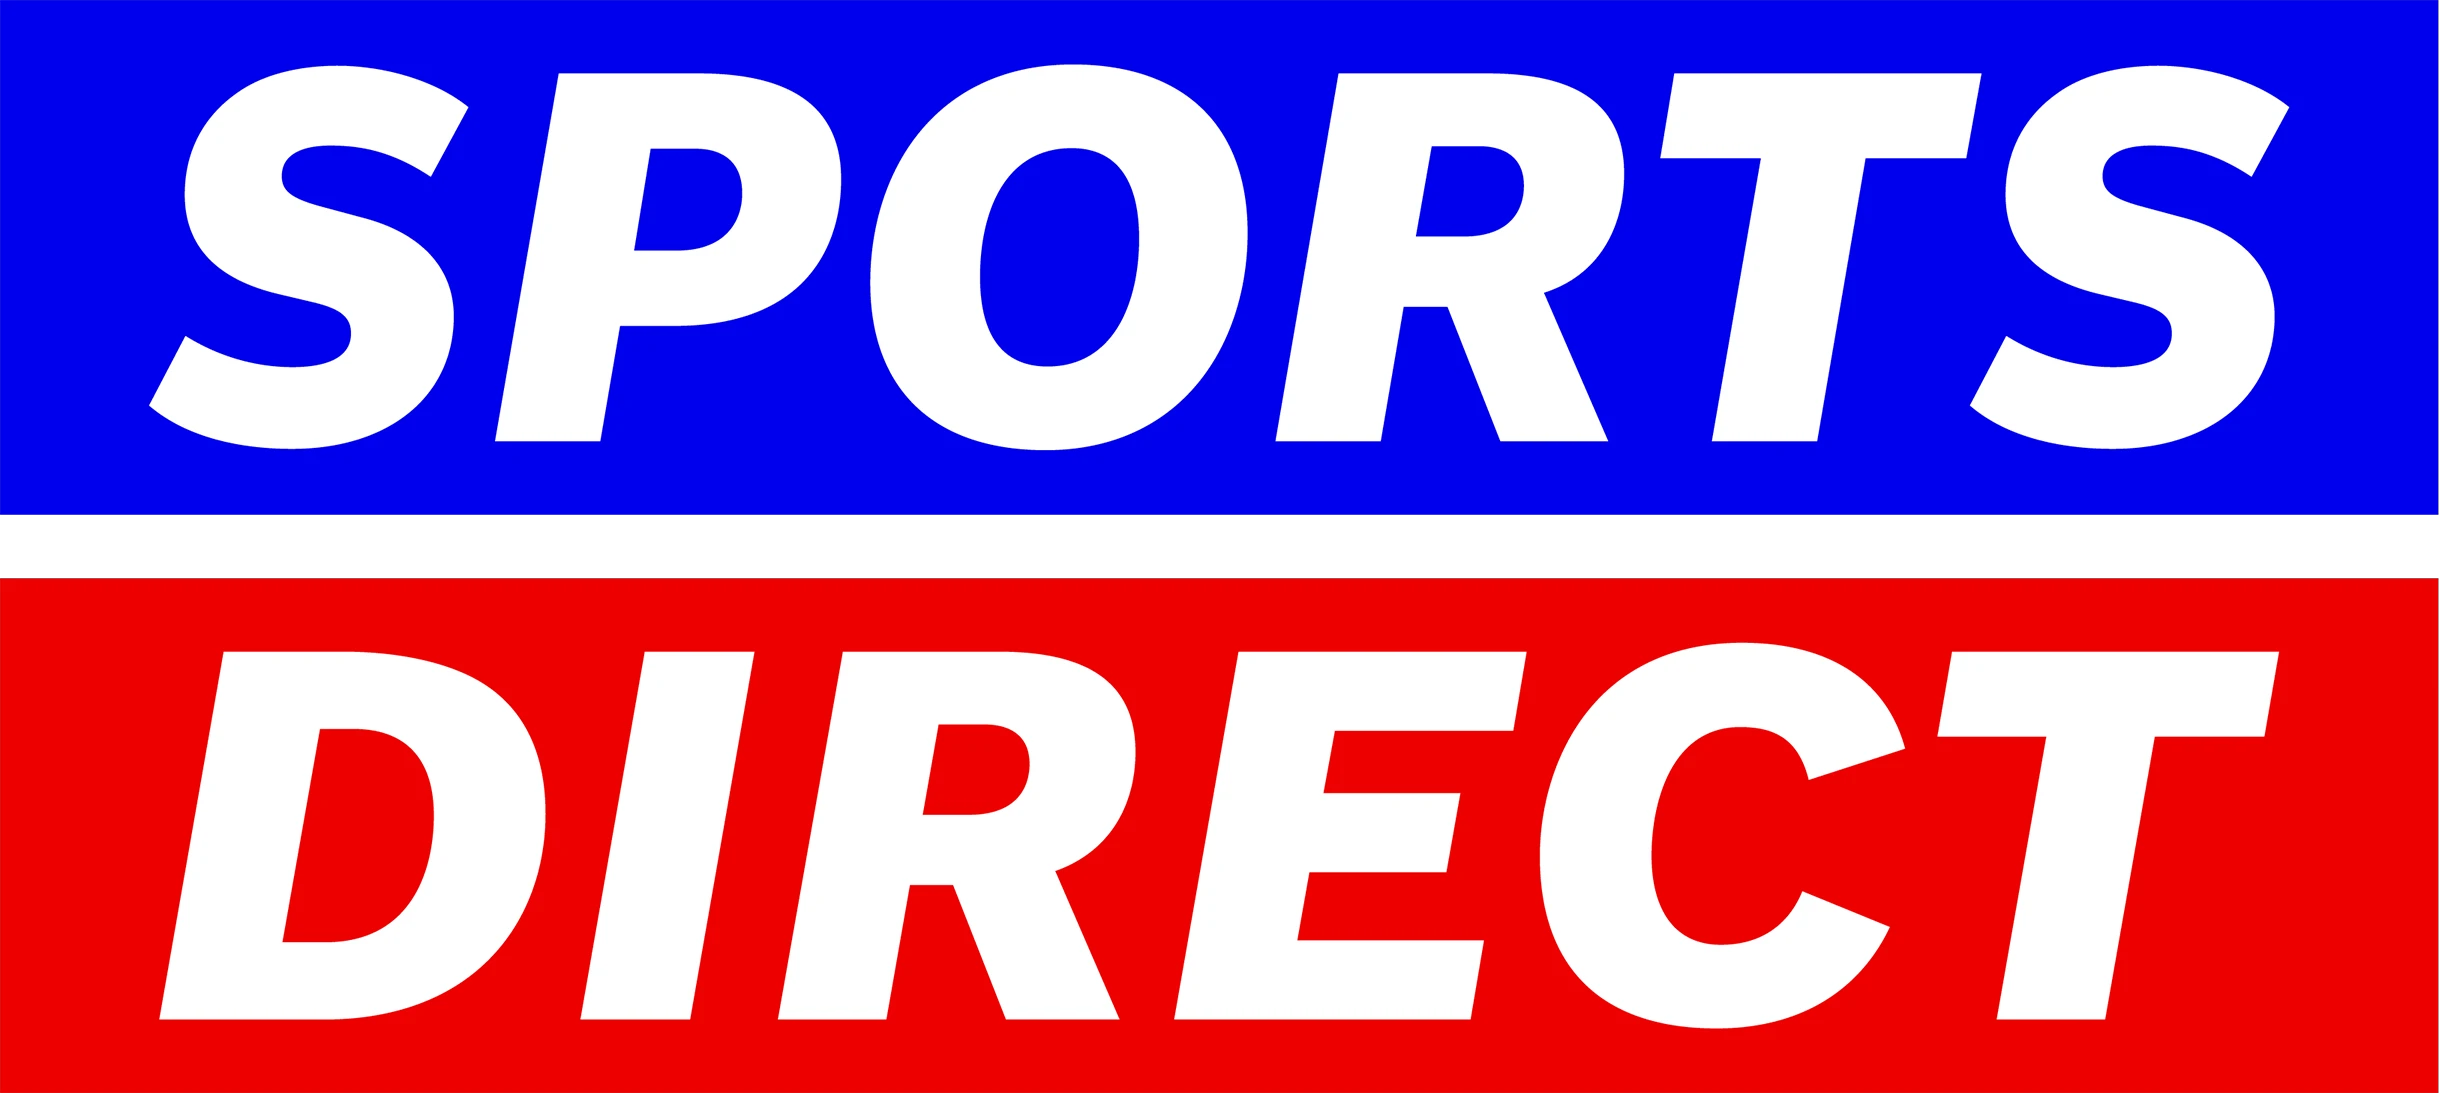 sportsdirect.com